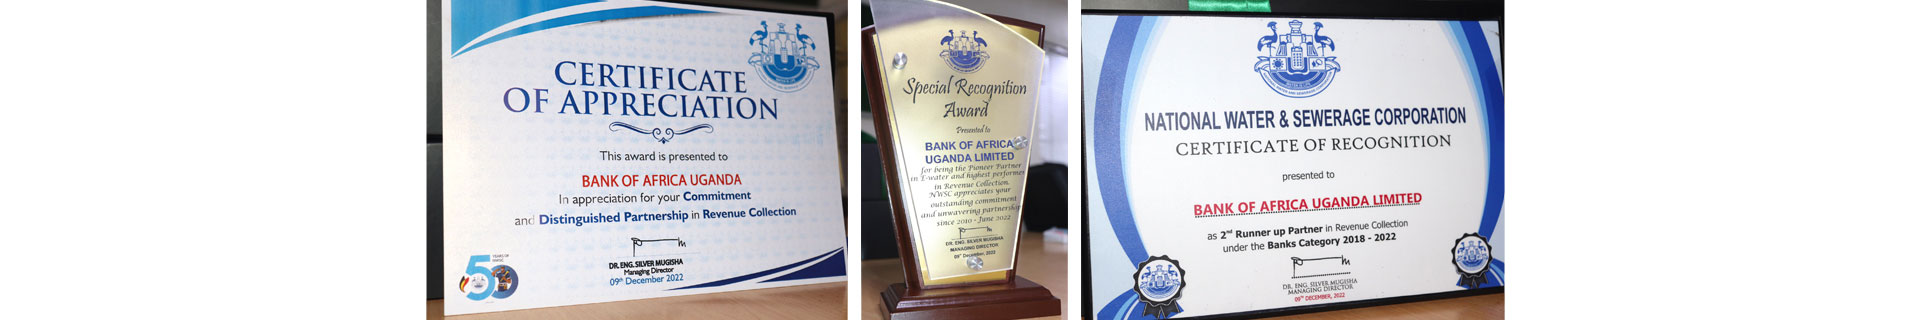 BOA-UGANDA recognized by NWSC